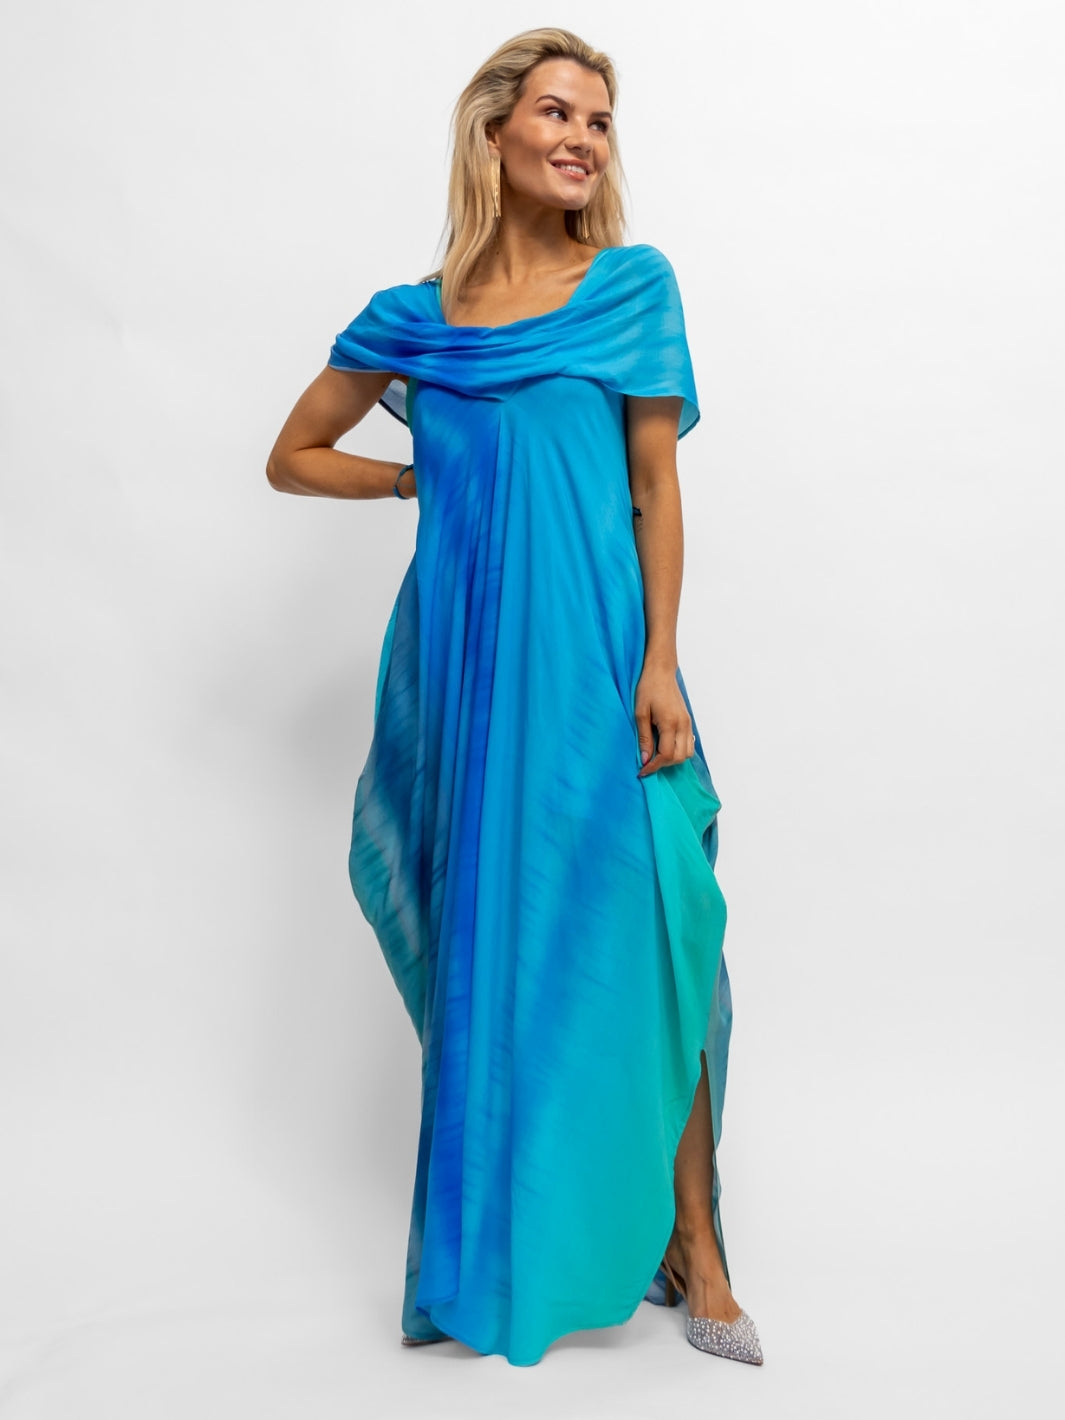 Xenia Design Dress Xenia PAKA Dress in Aqua Blue